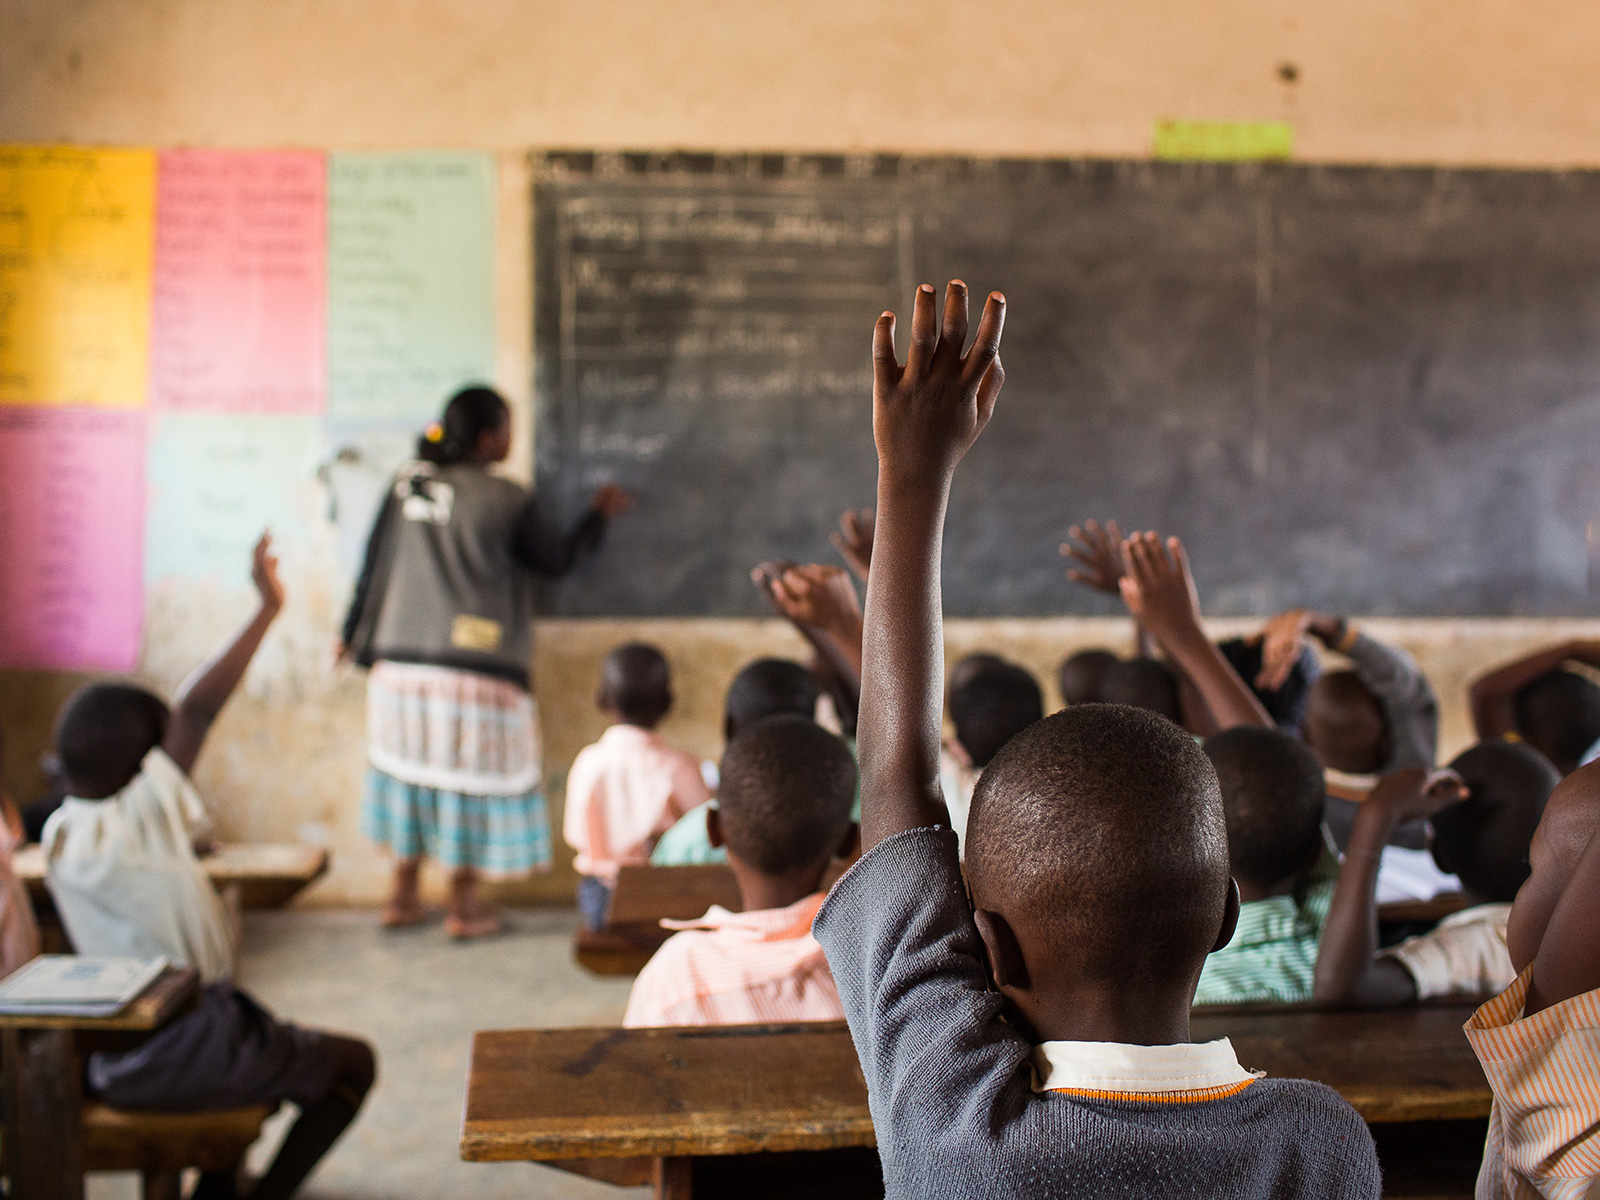 Children in a Ugandan classroom raise their hands to speak, while their teacher writes on the chalkboard